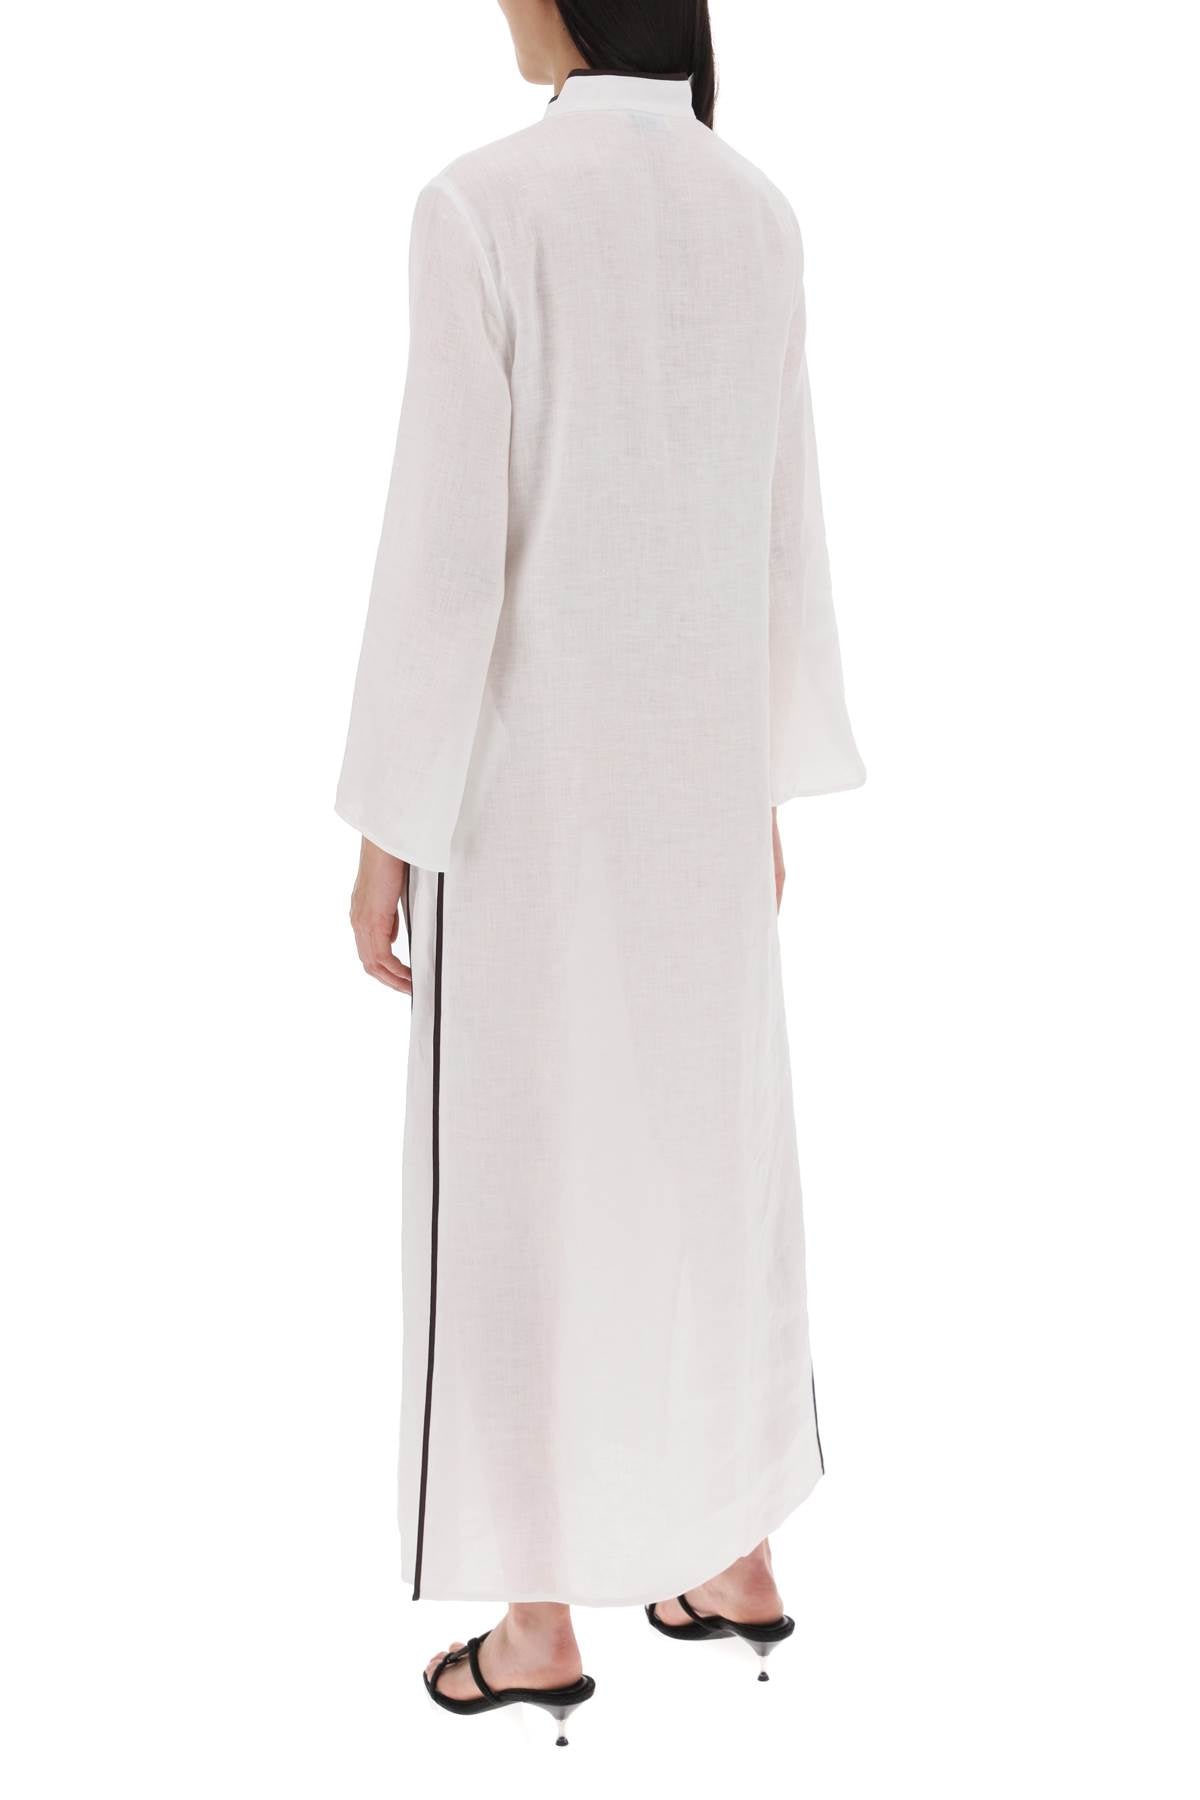 TORY BURCH Long Linen Caftan Dress for Women in White